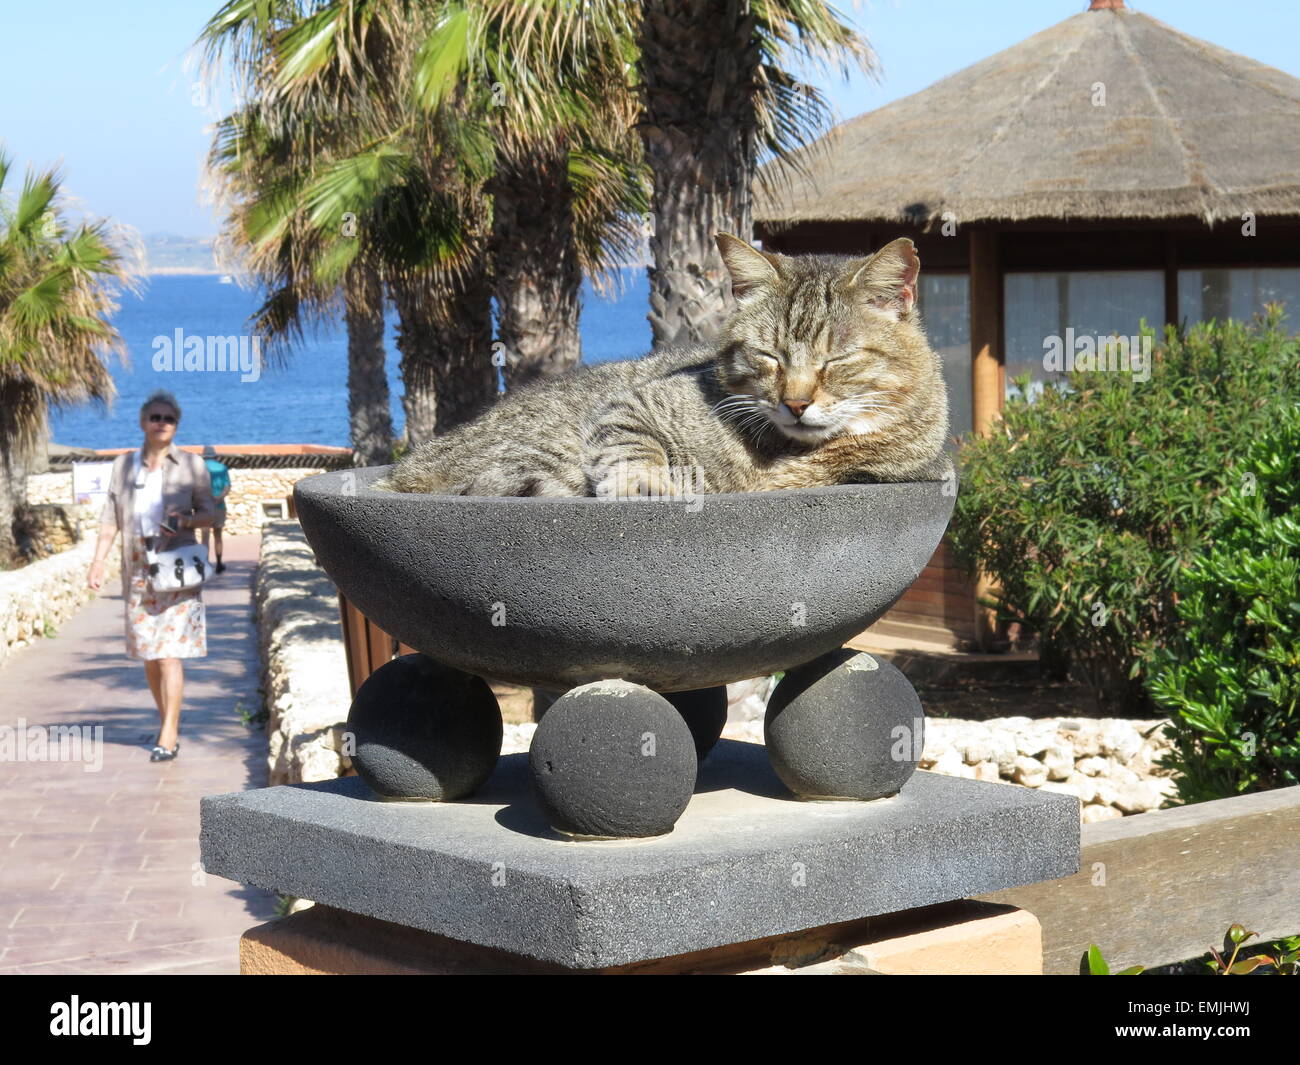 Tabby Cat asleep in a bowl. Stock Photo